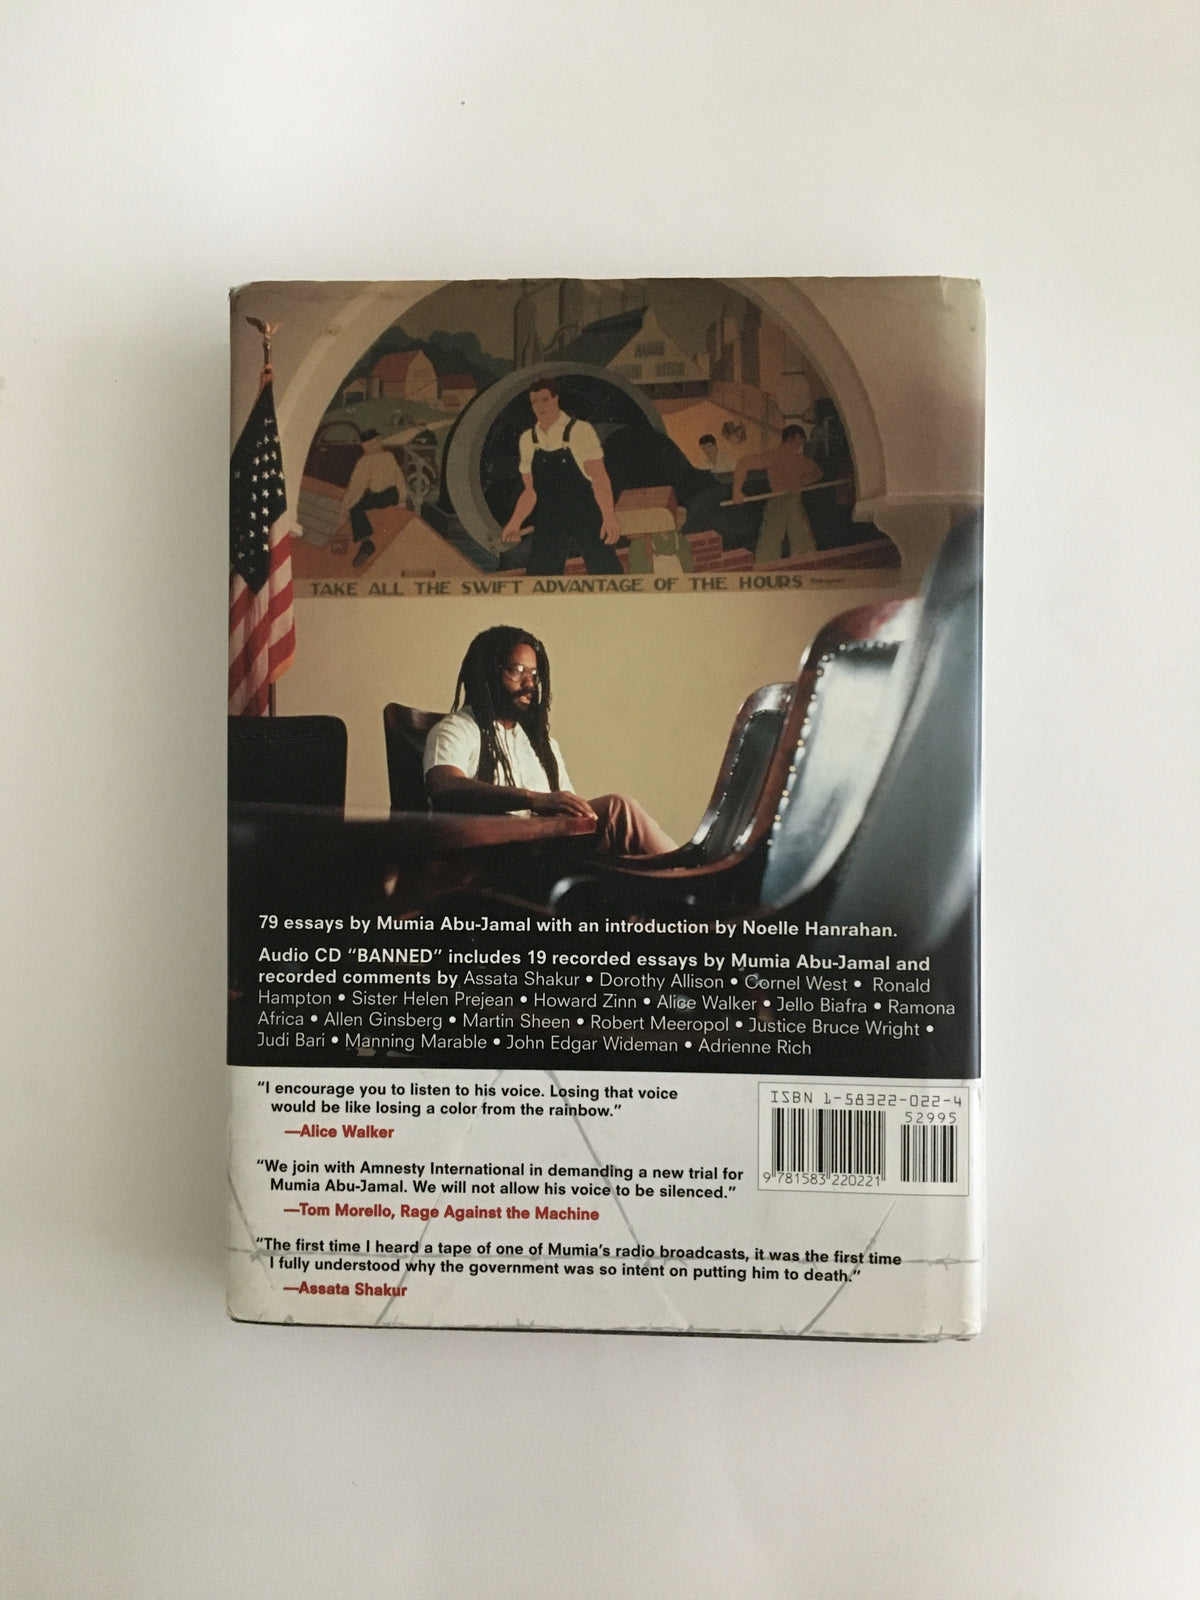 All Things Censored by Mumia Abu-Jamal